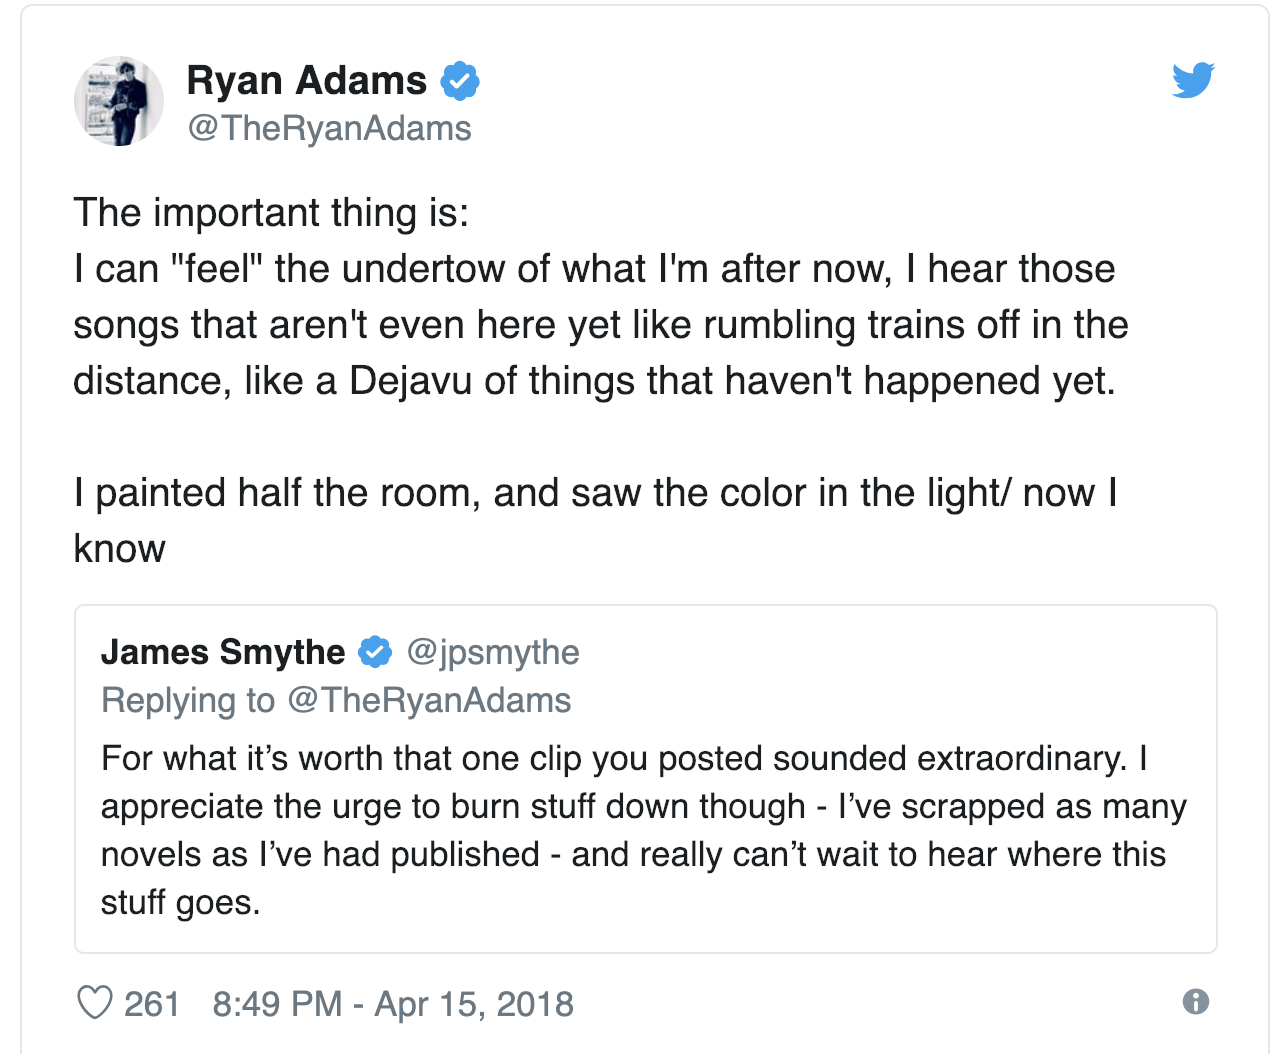 Ryan Adams second tweet about the album Big Colors